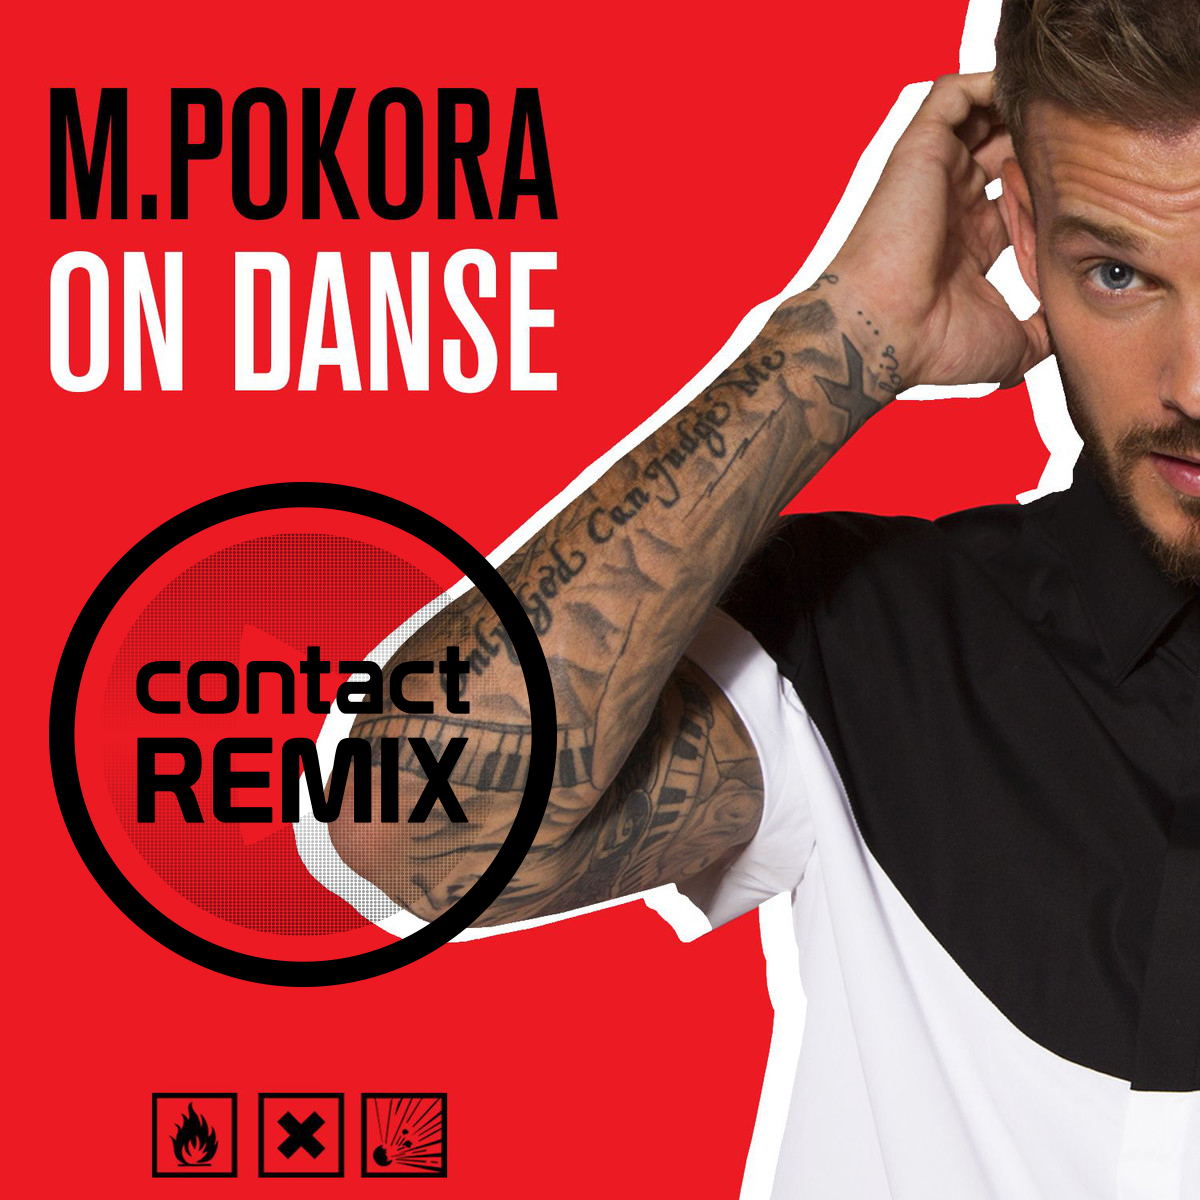 Contact FM remixe M.Pokora